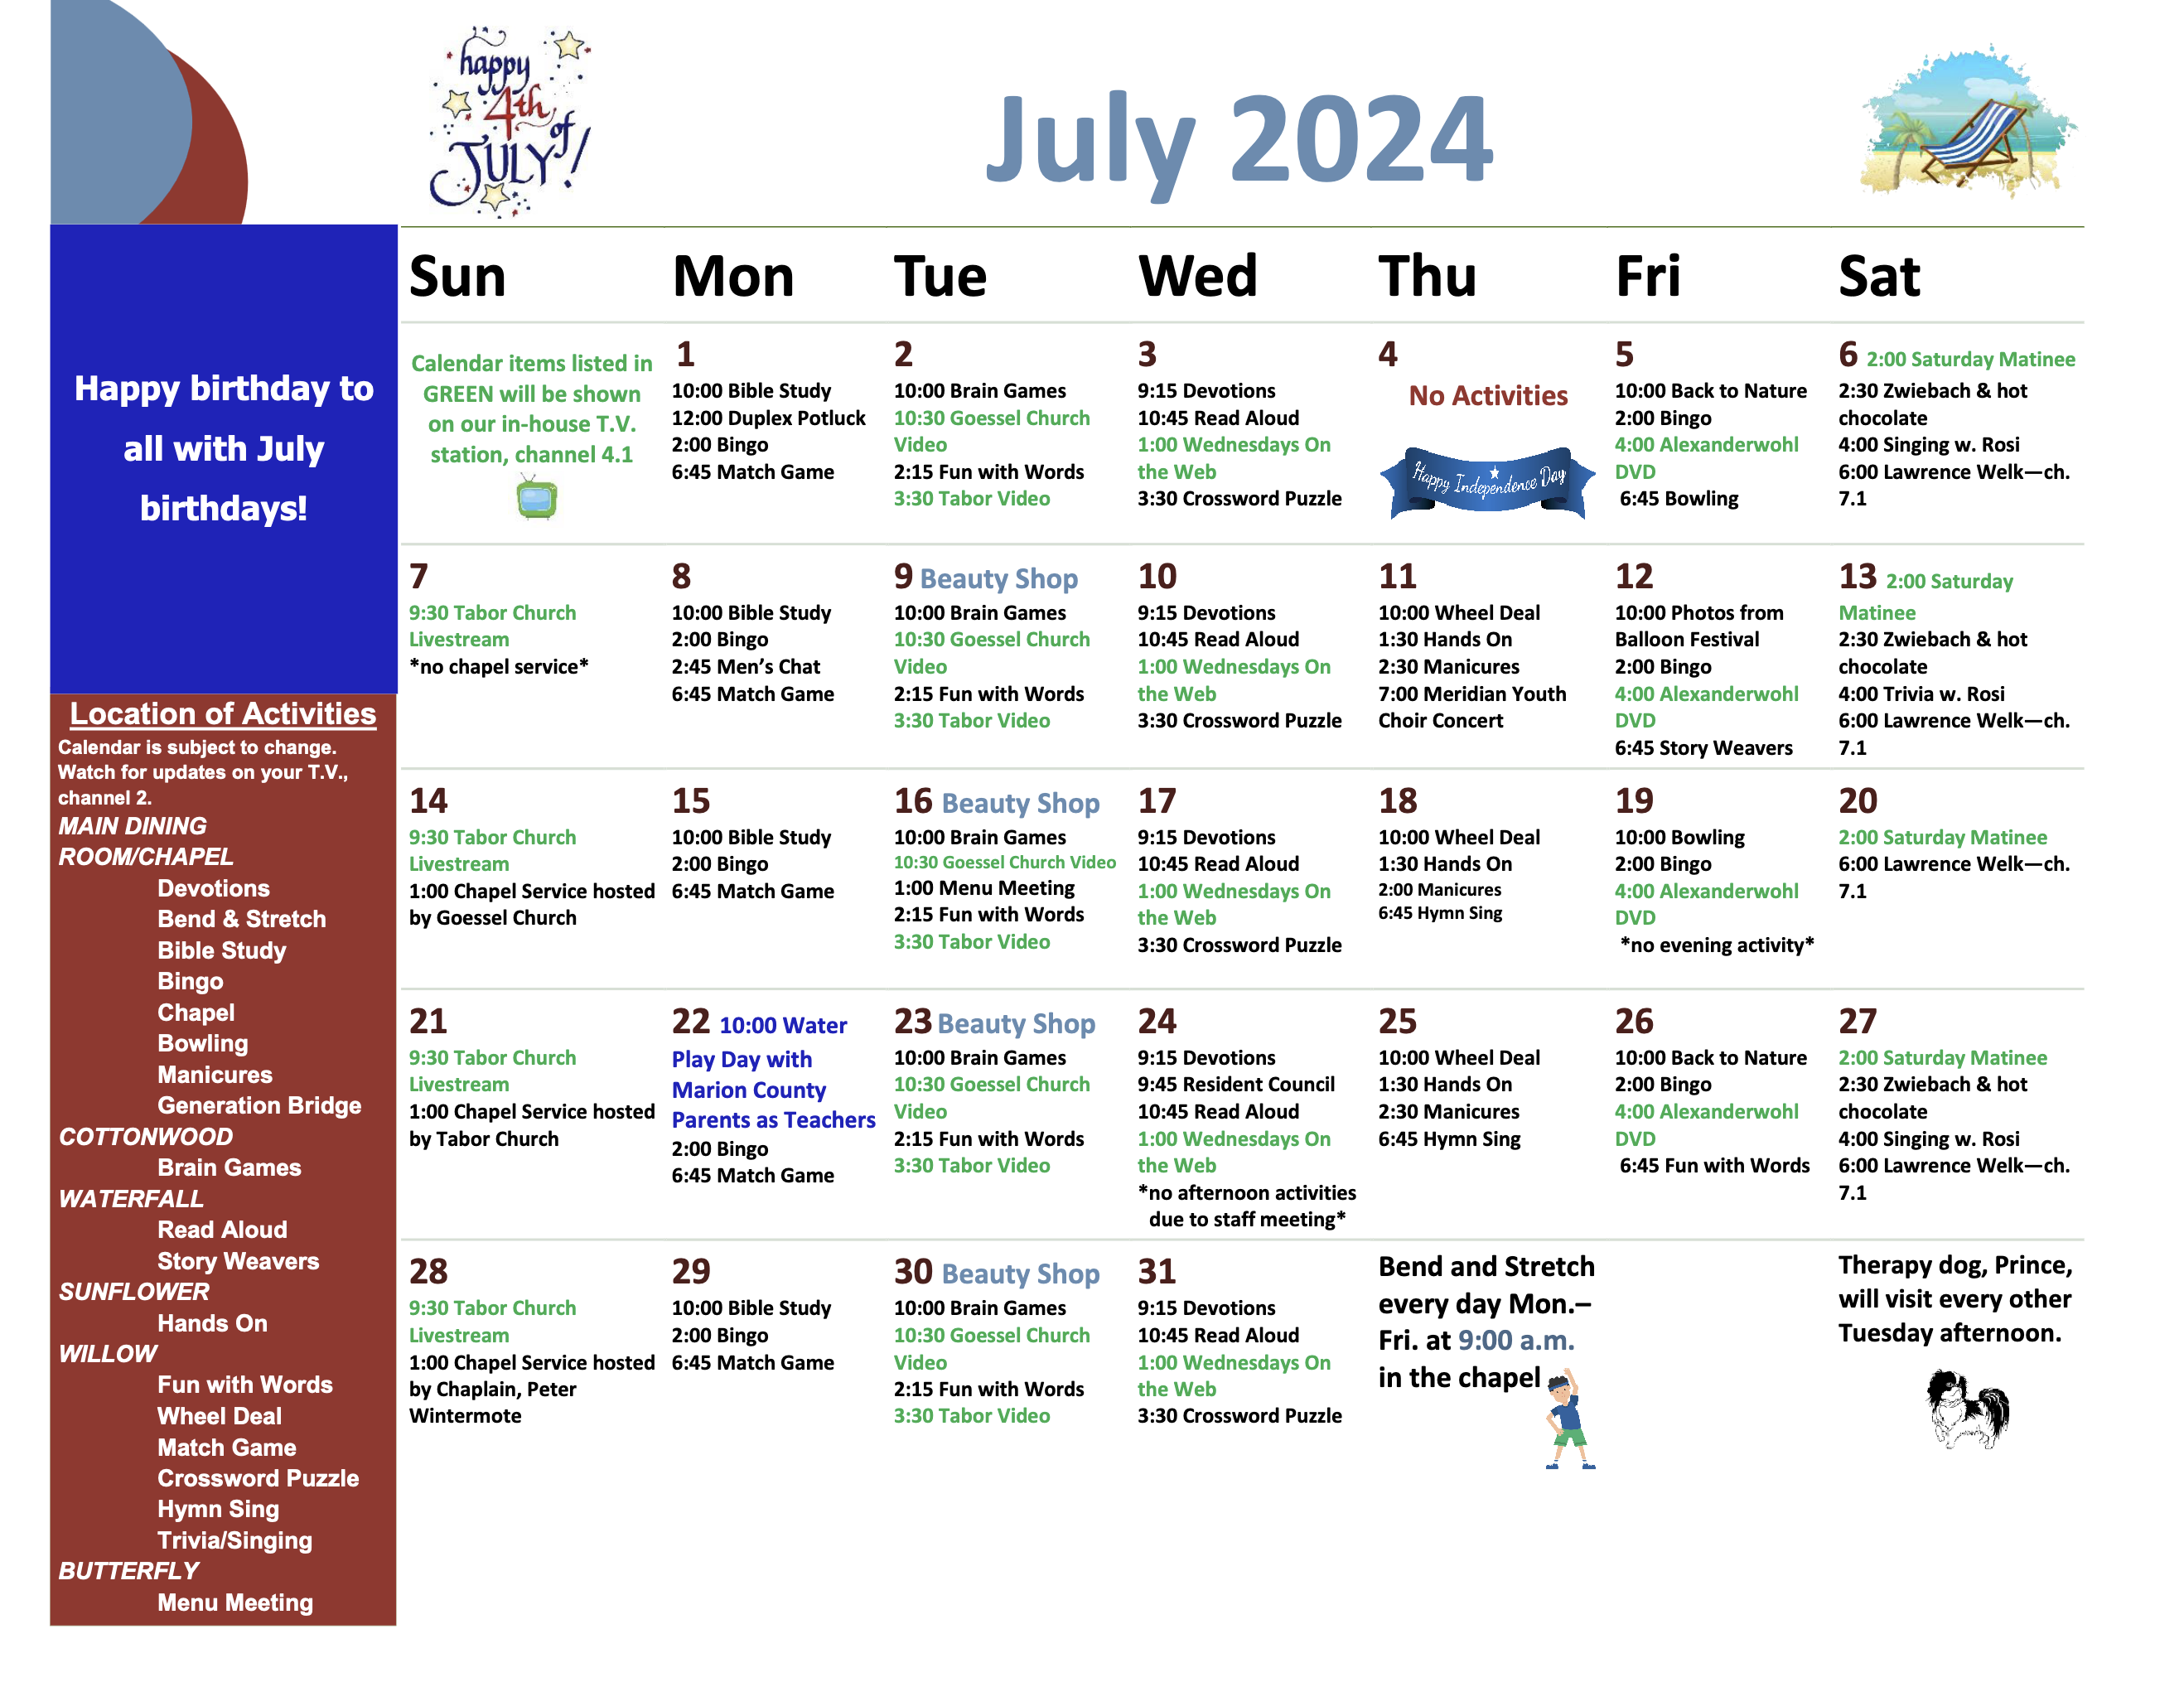 July 2024 activity calendar